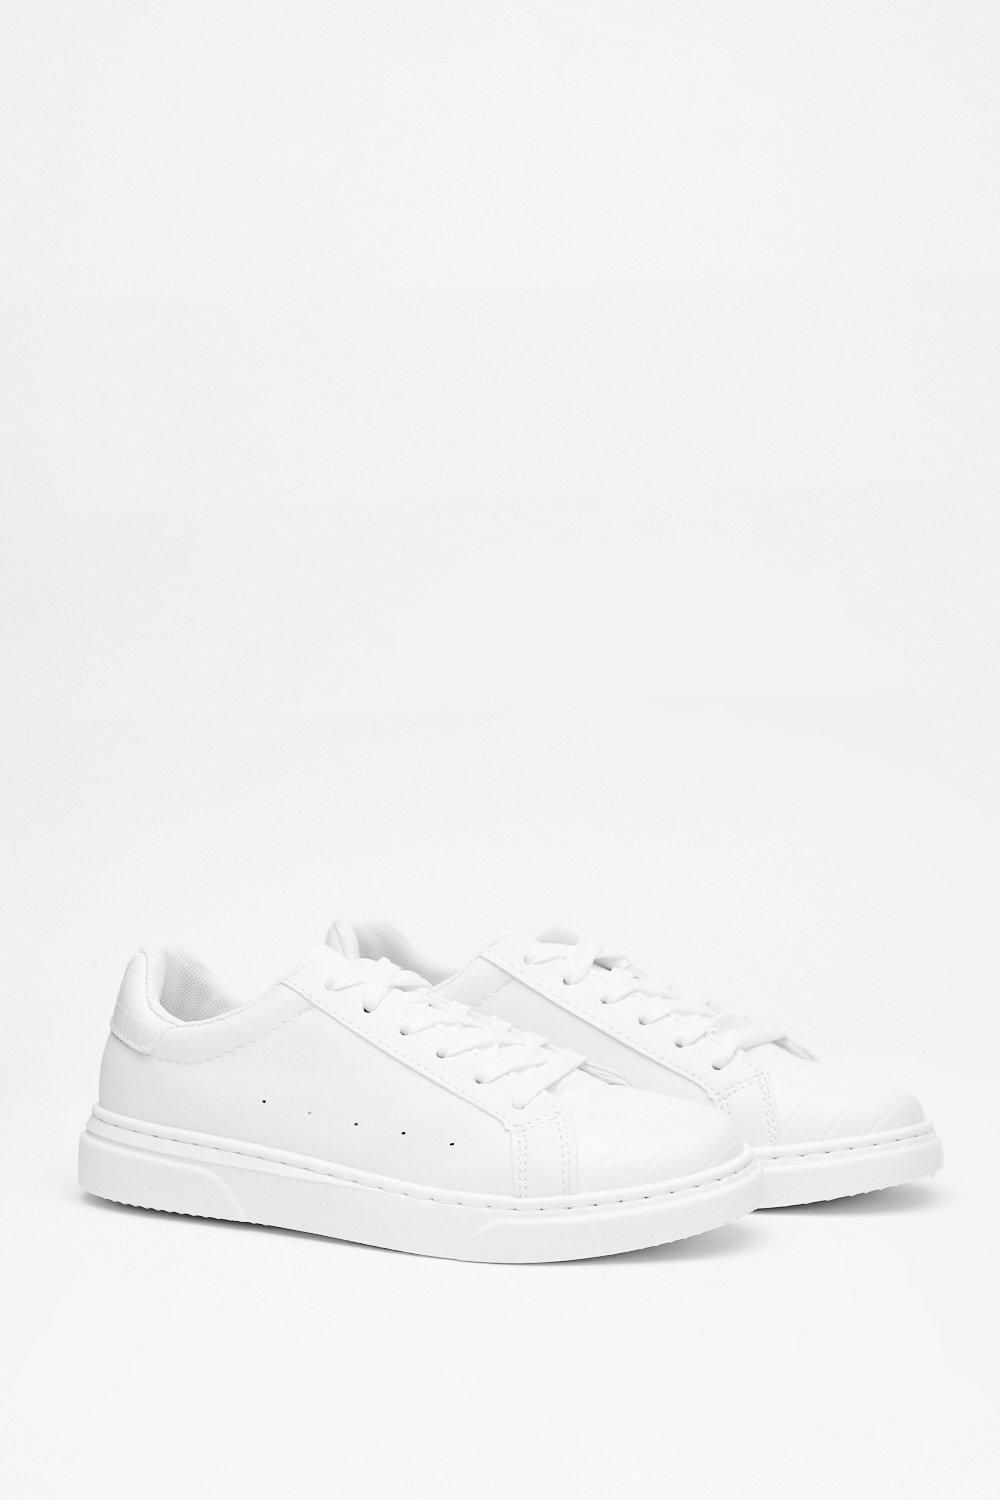 croc white sneakers